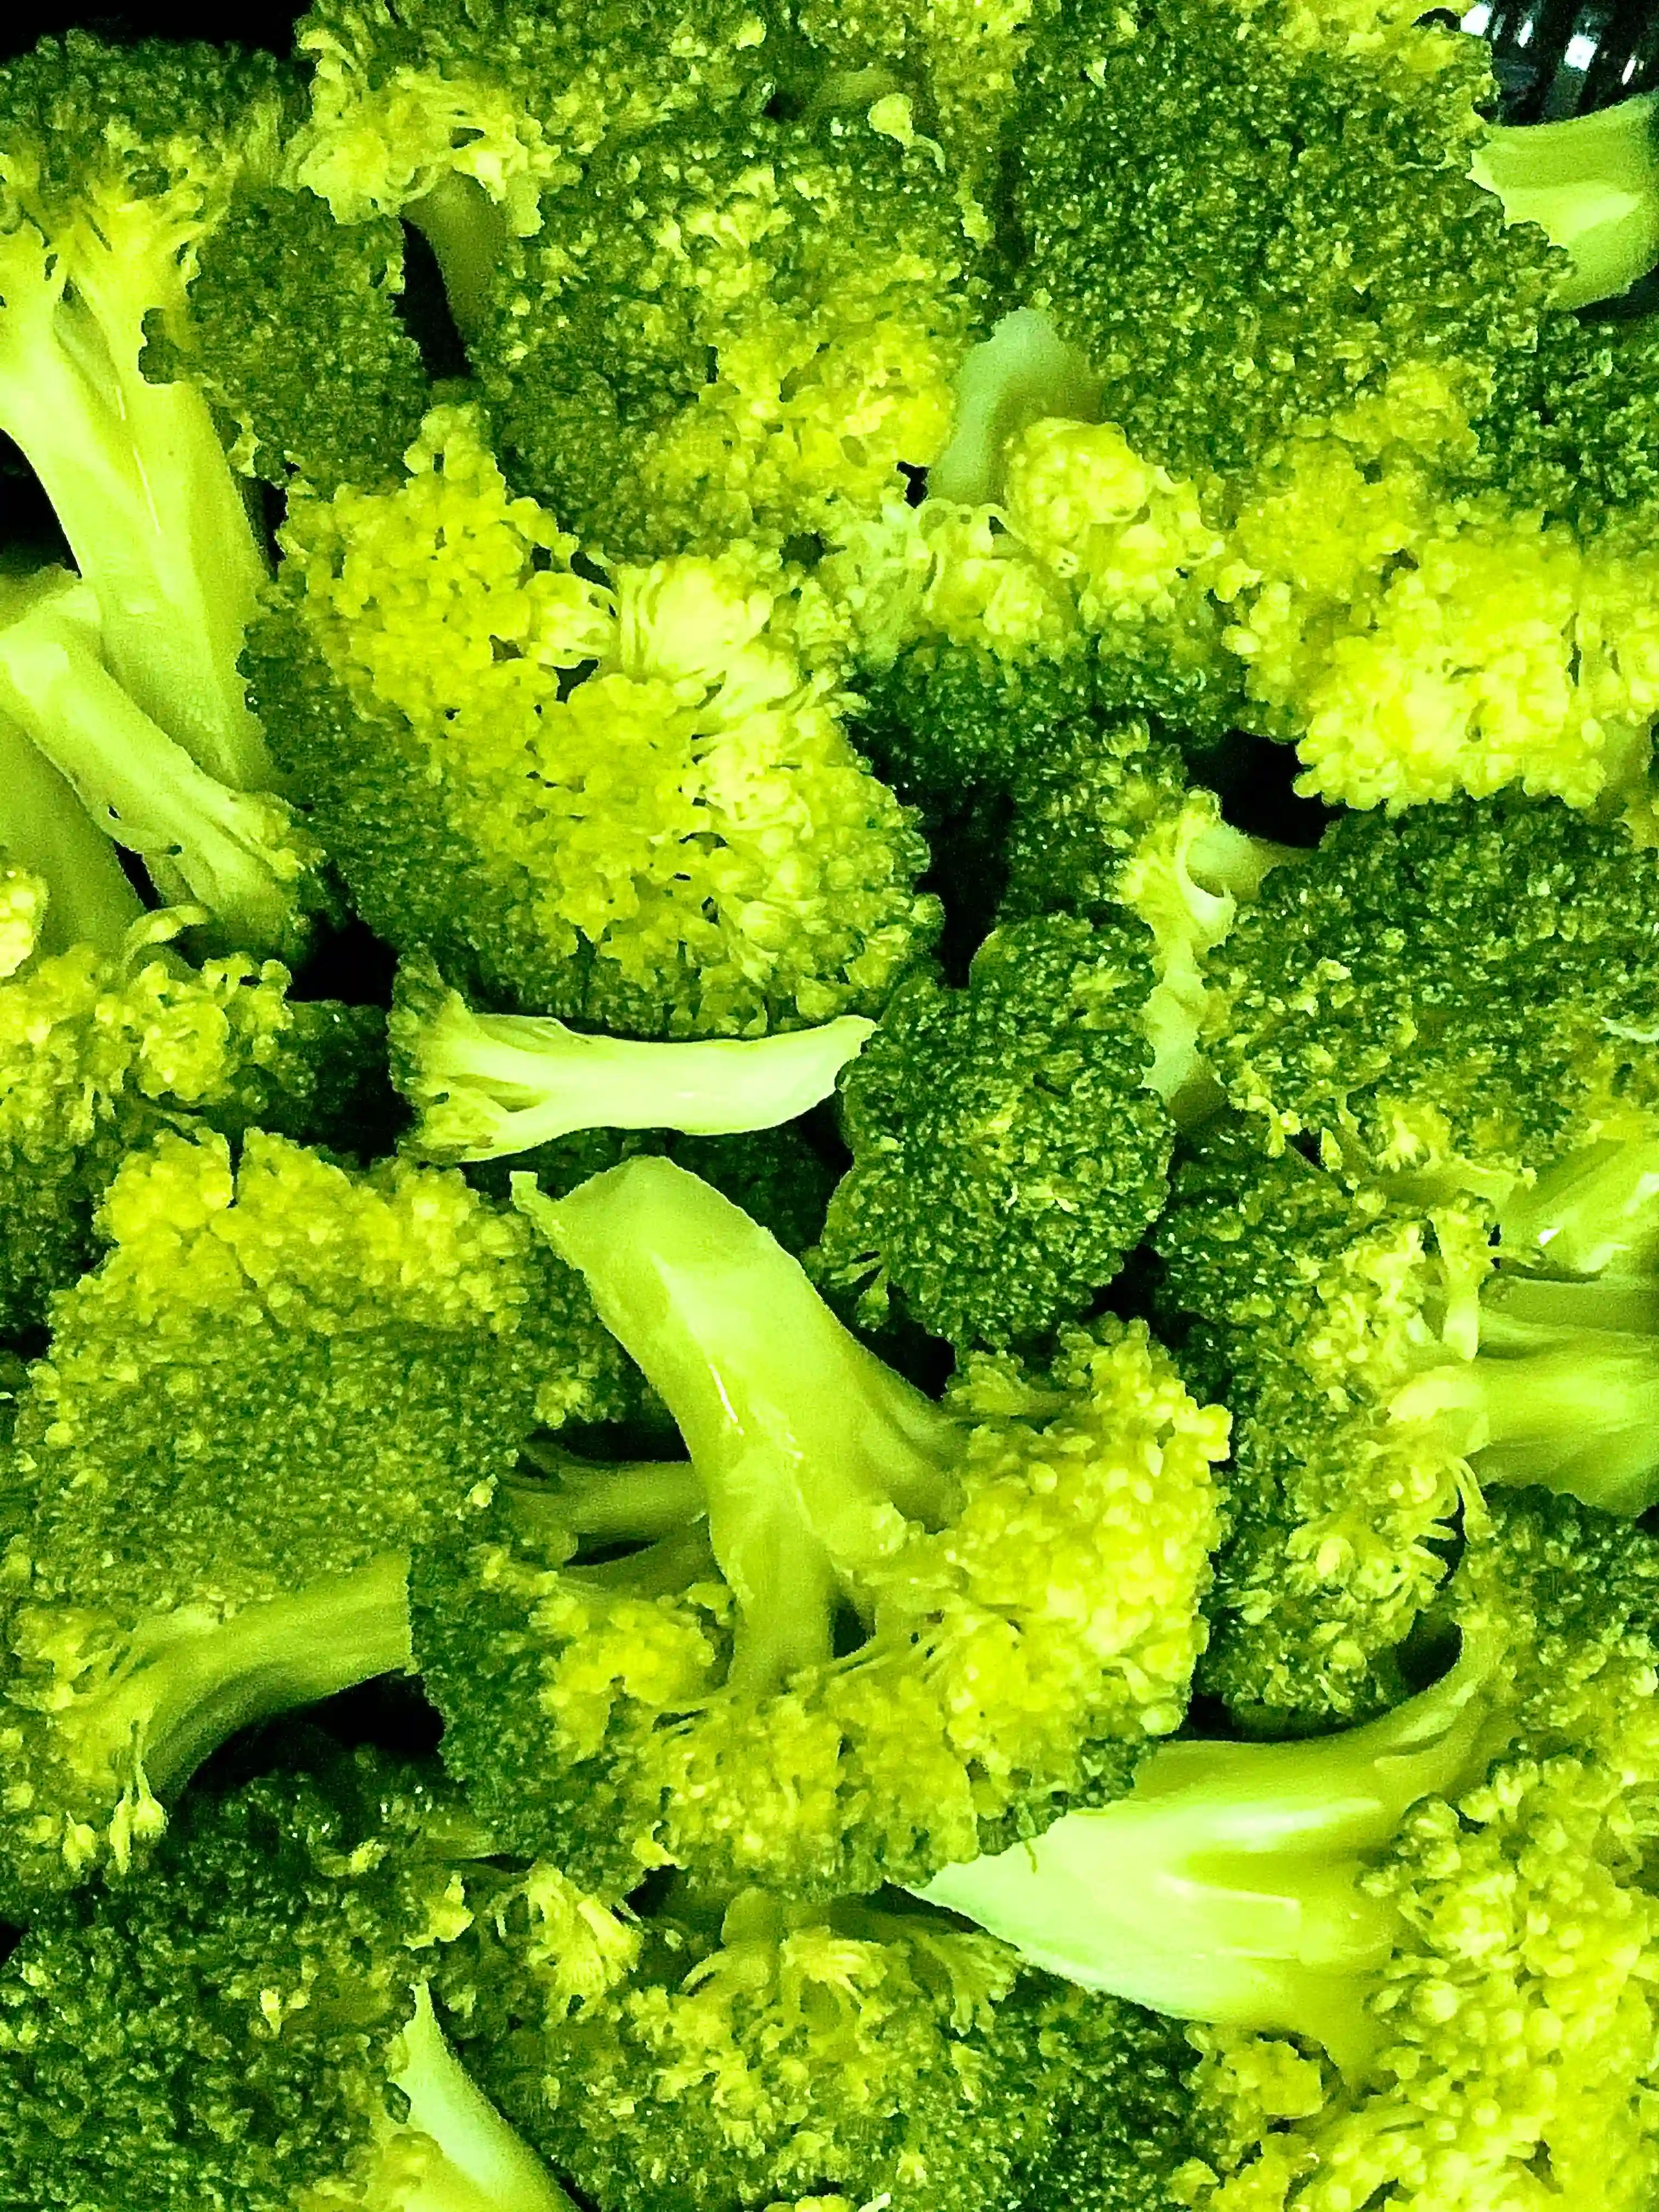 a pile of broccoli